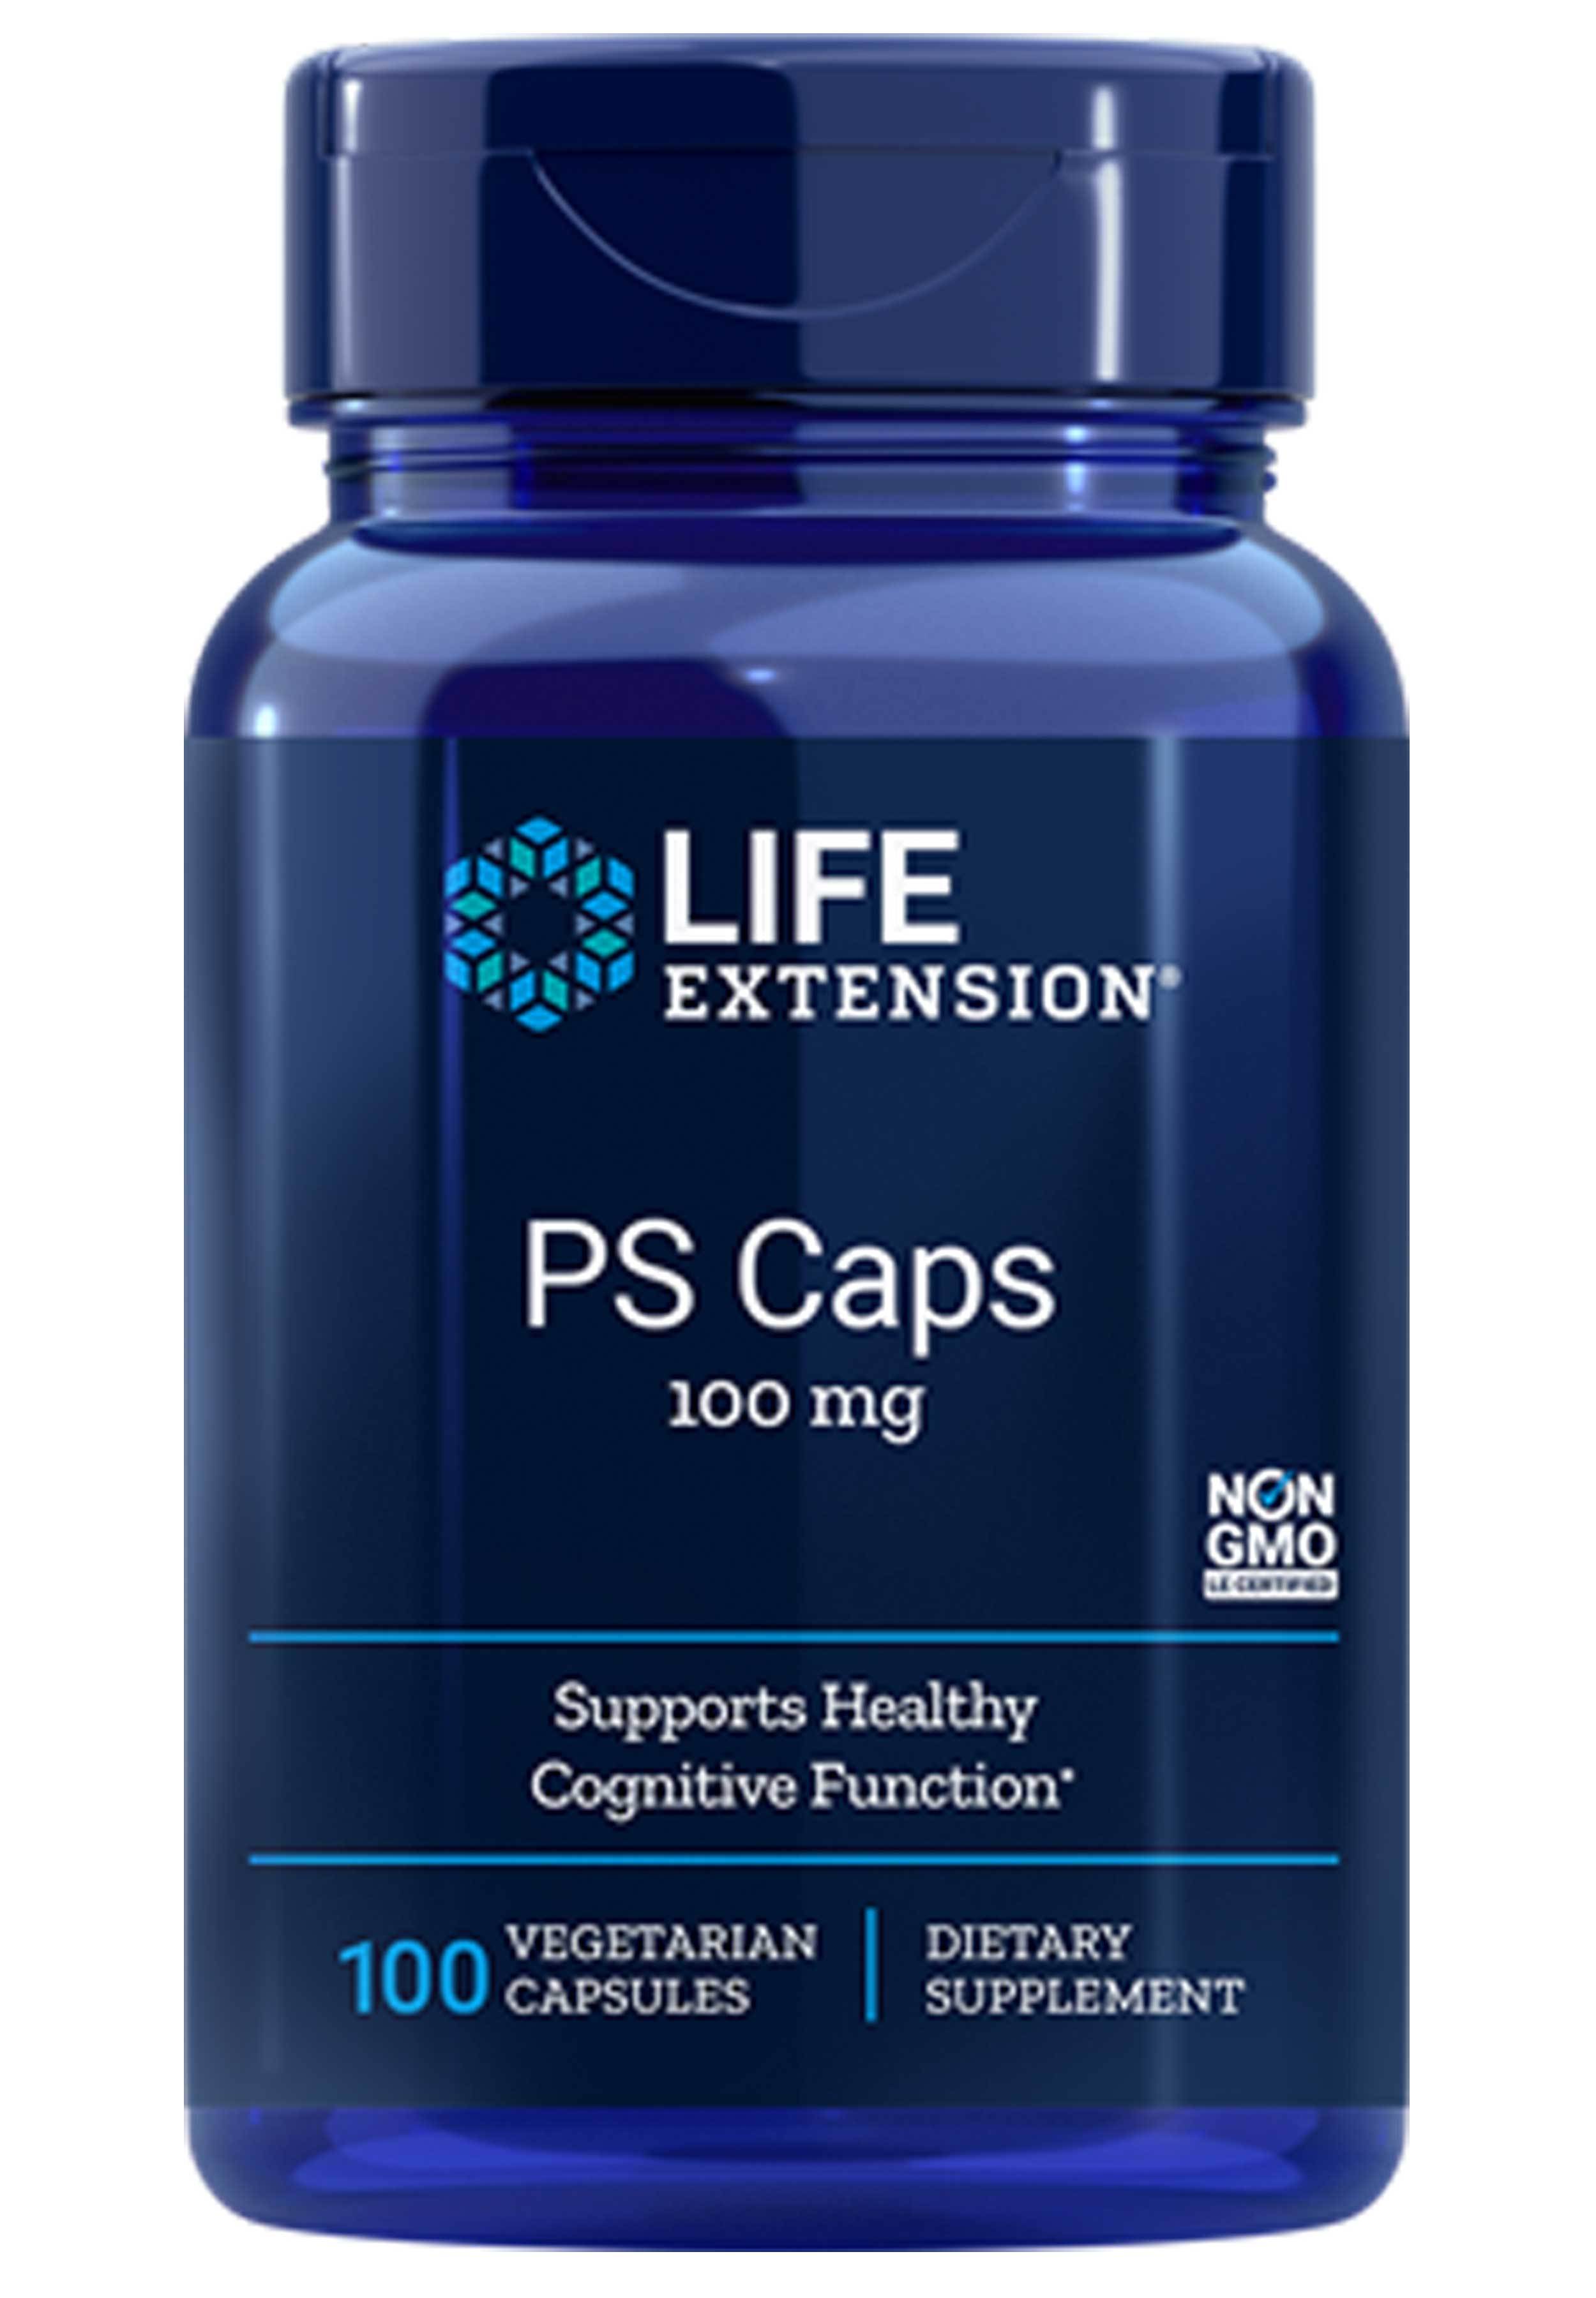 Life Extension PS (Phosphatidylserine) Caps